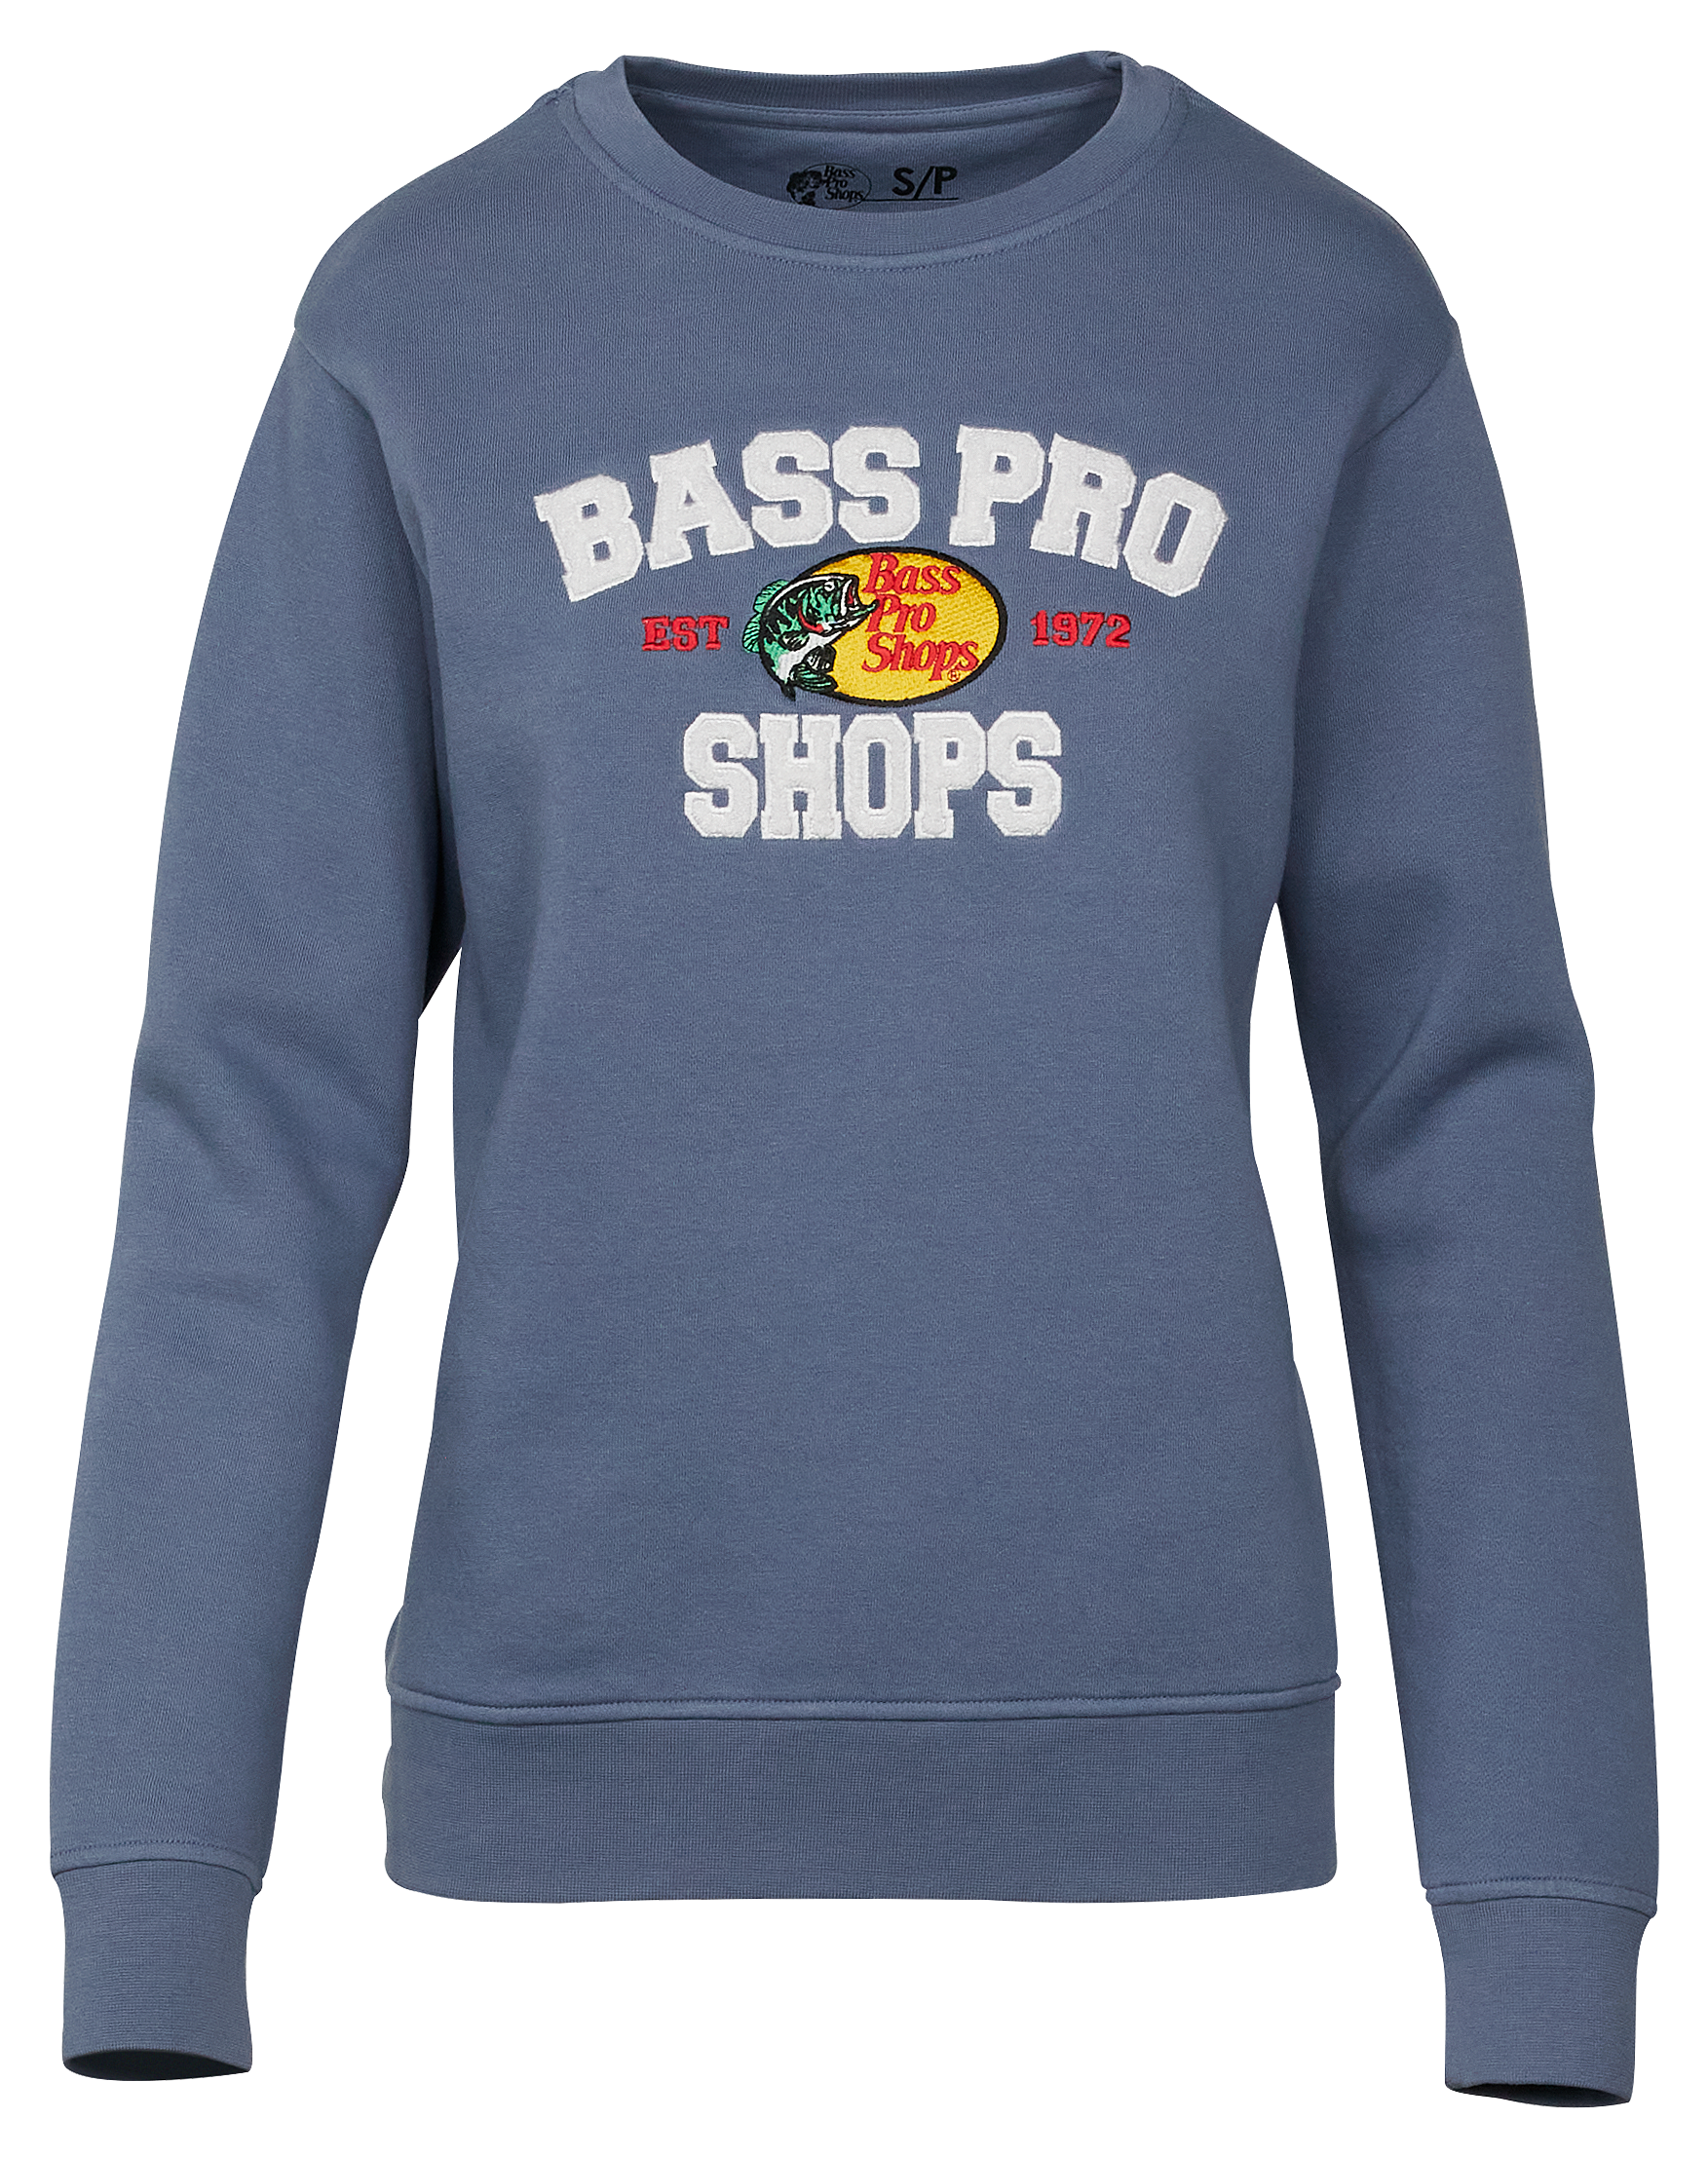 Bass Pro Shops Logo Crew-Neck Long-Sleeve Sweatshirt for Ladies - Flint Stone - L